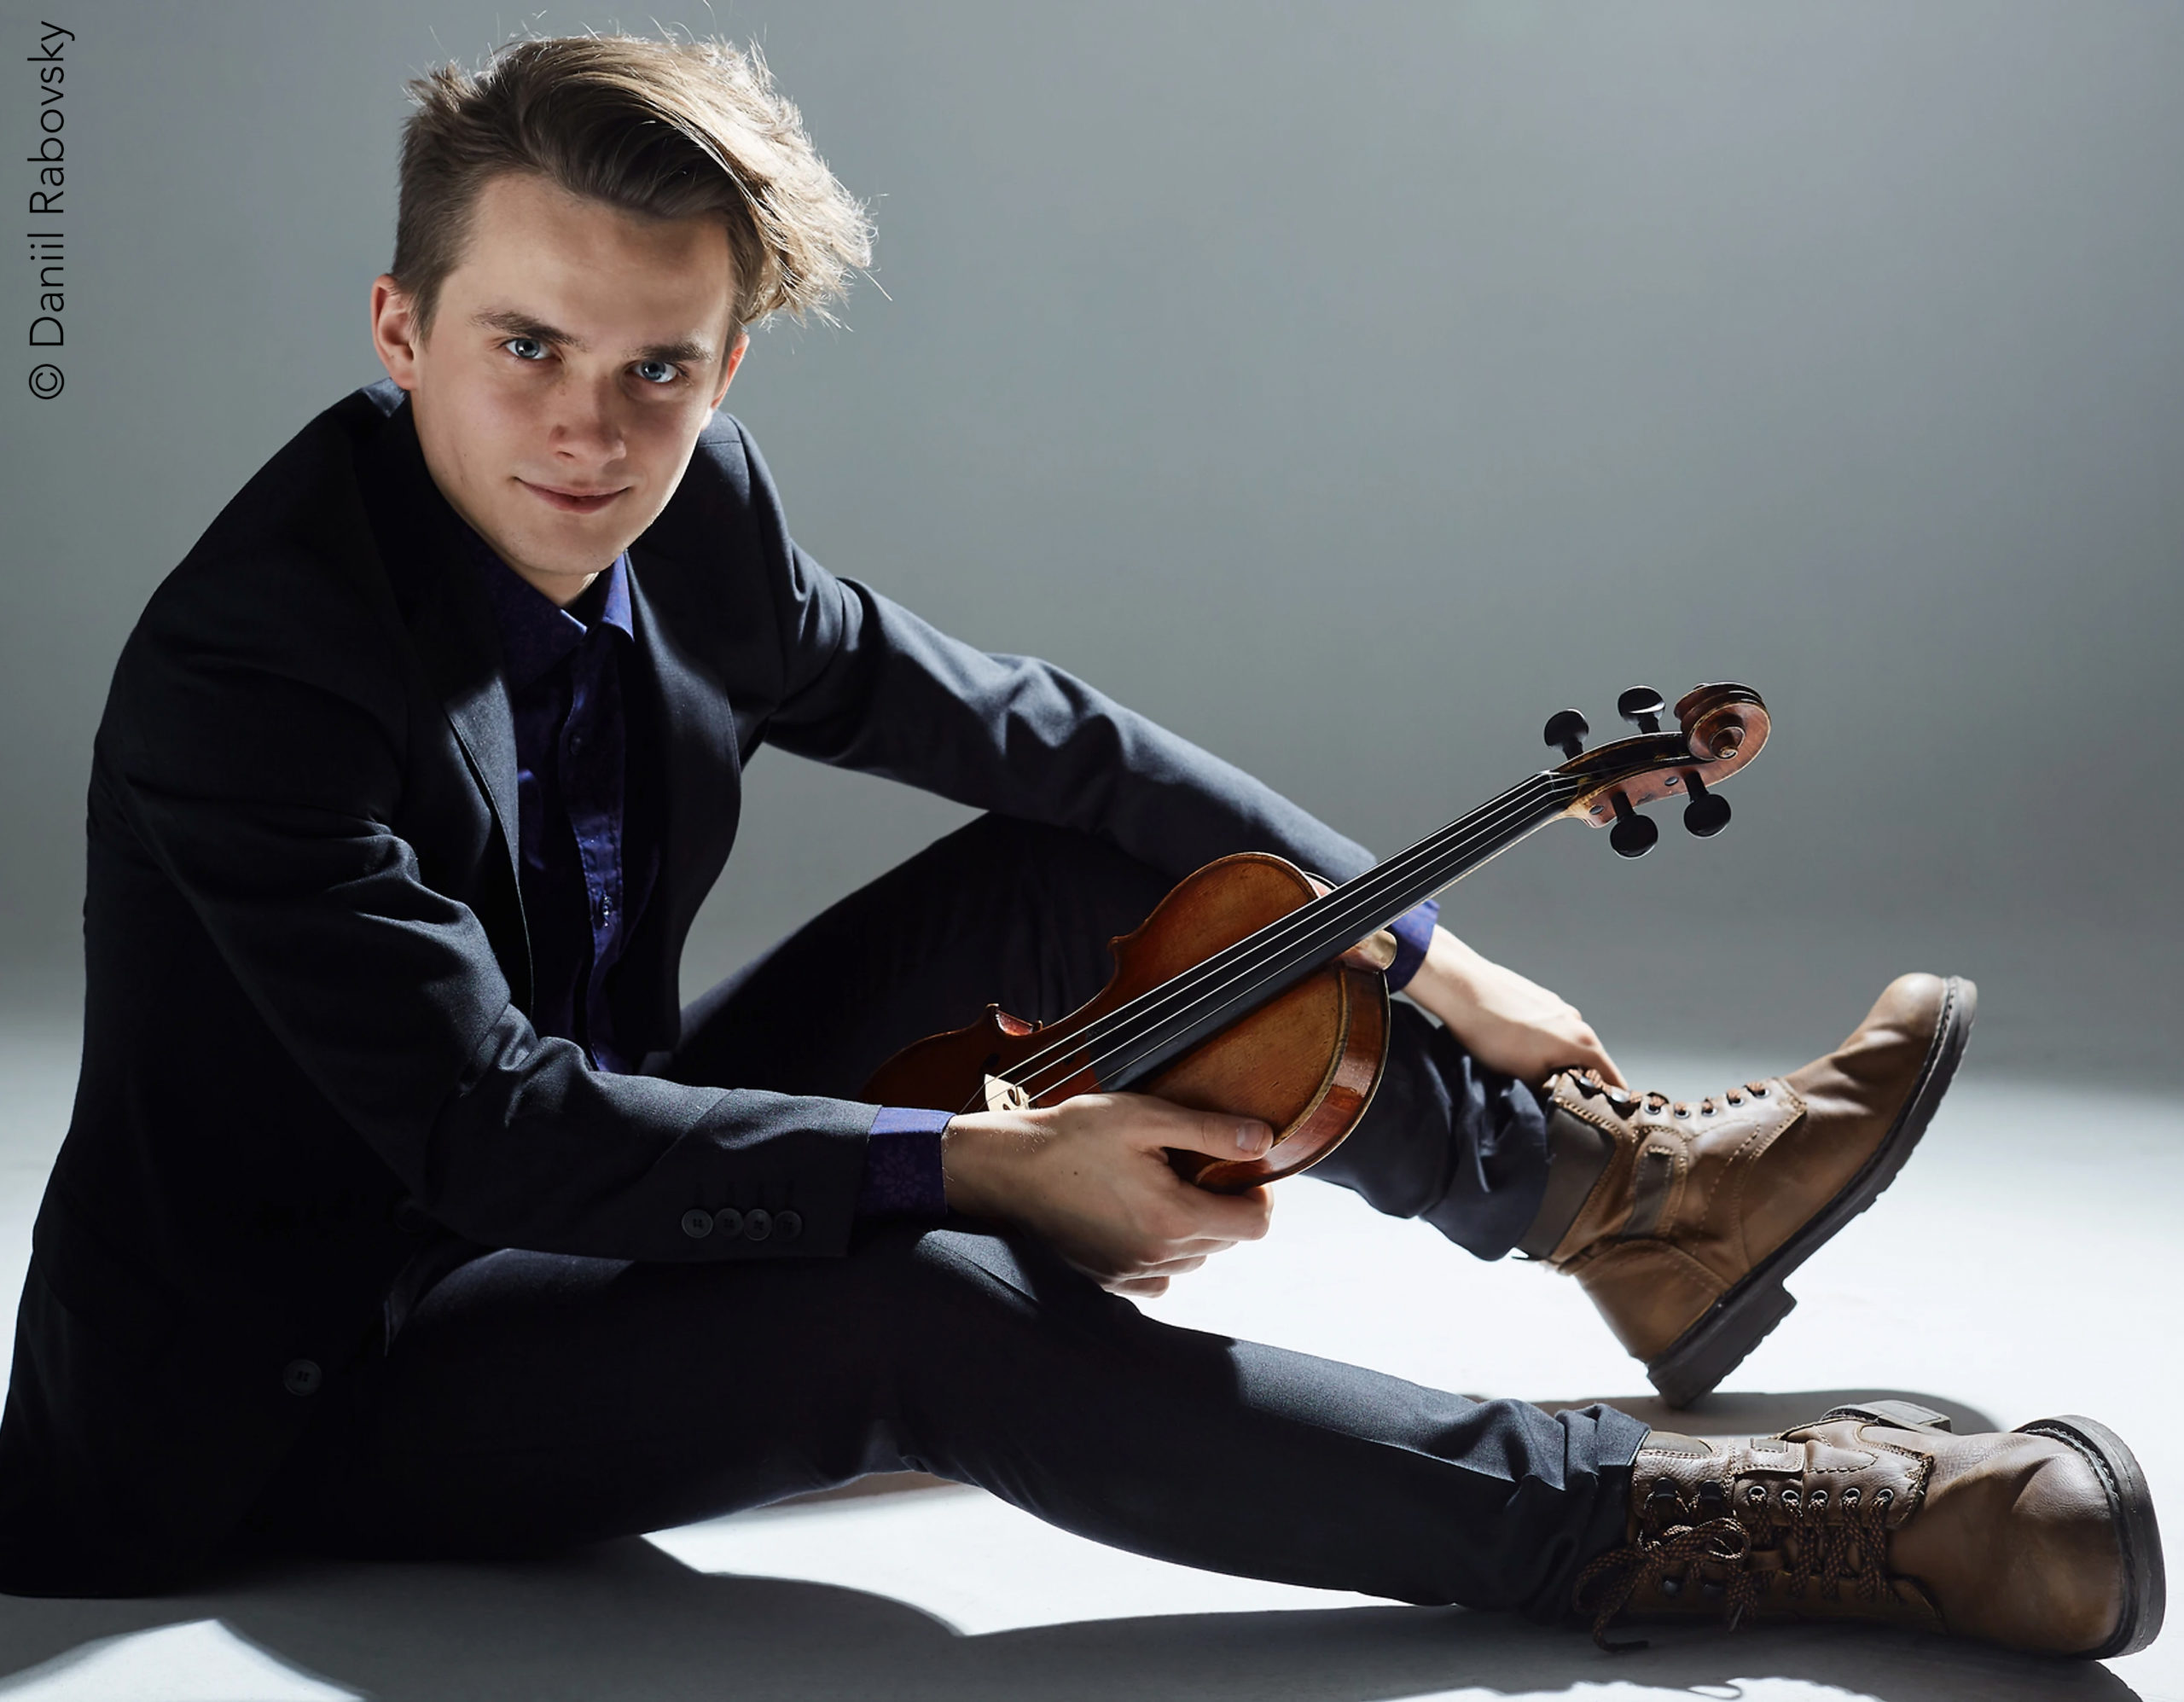 Dmitry Smirnov, violin